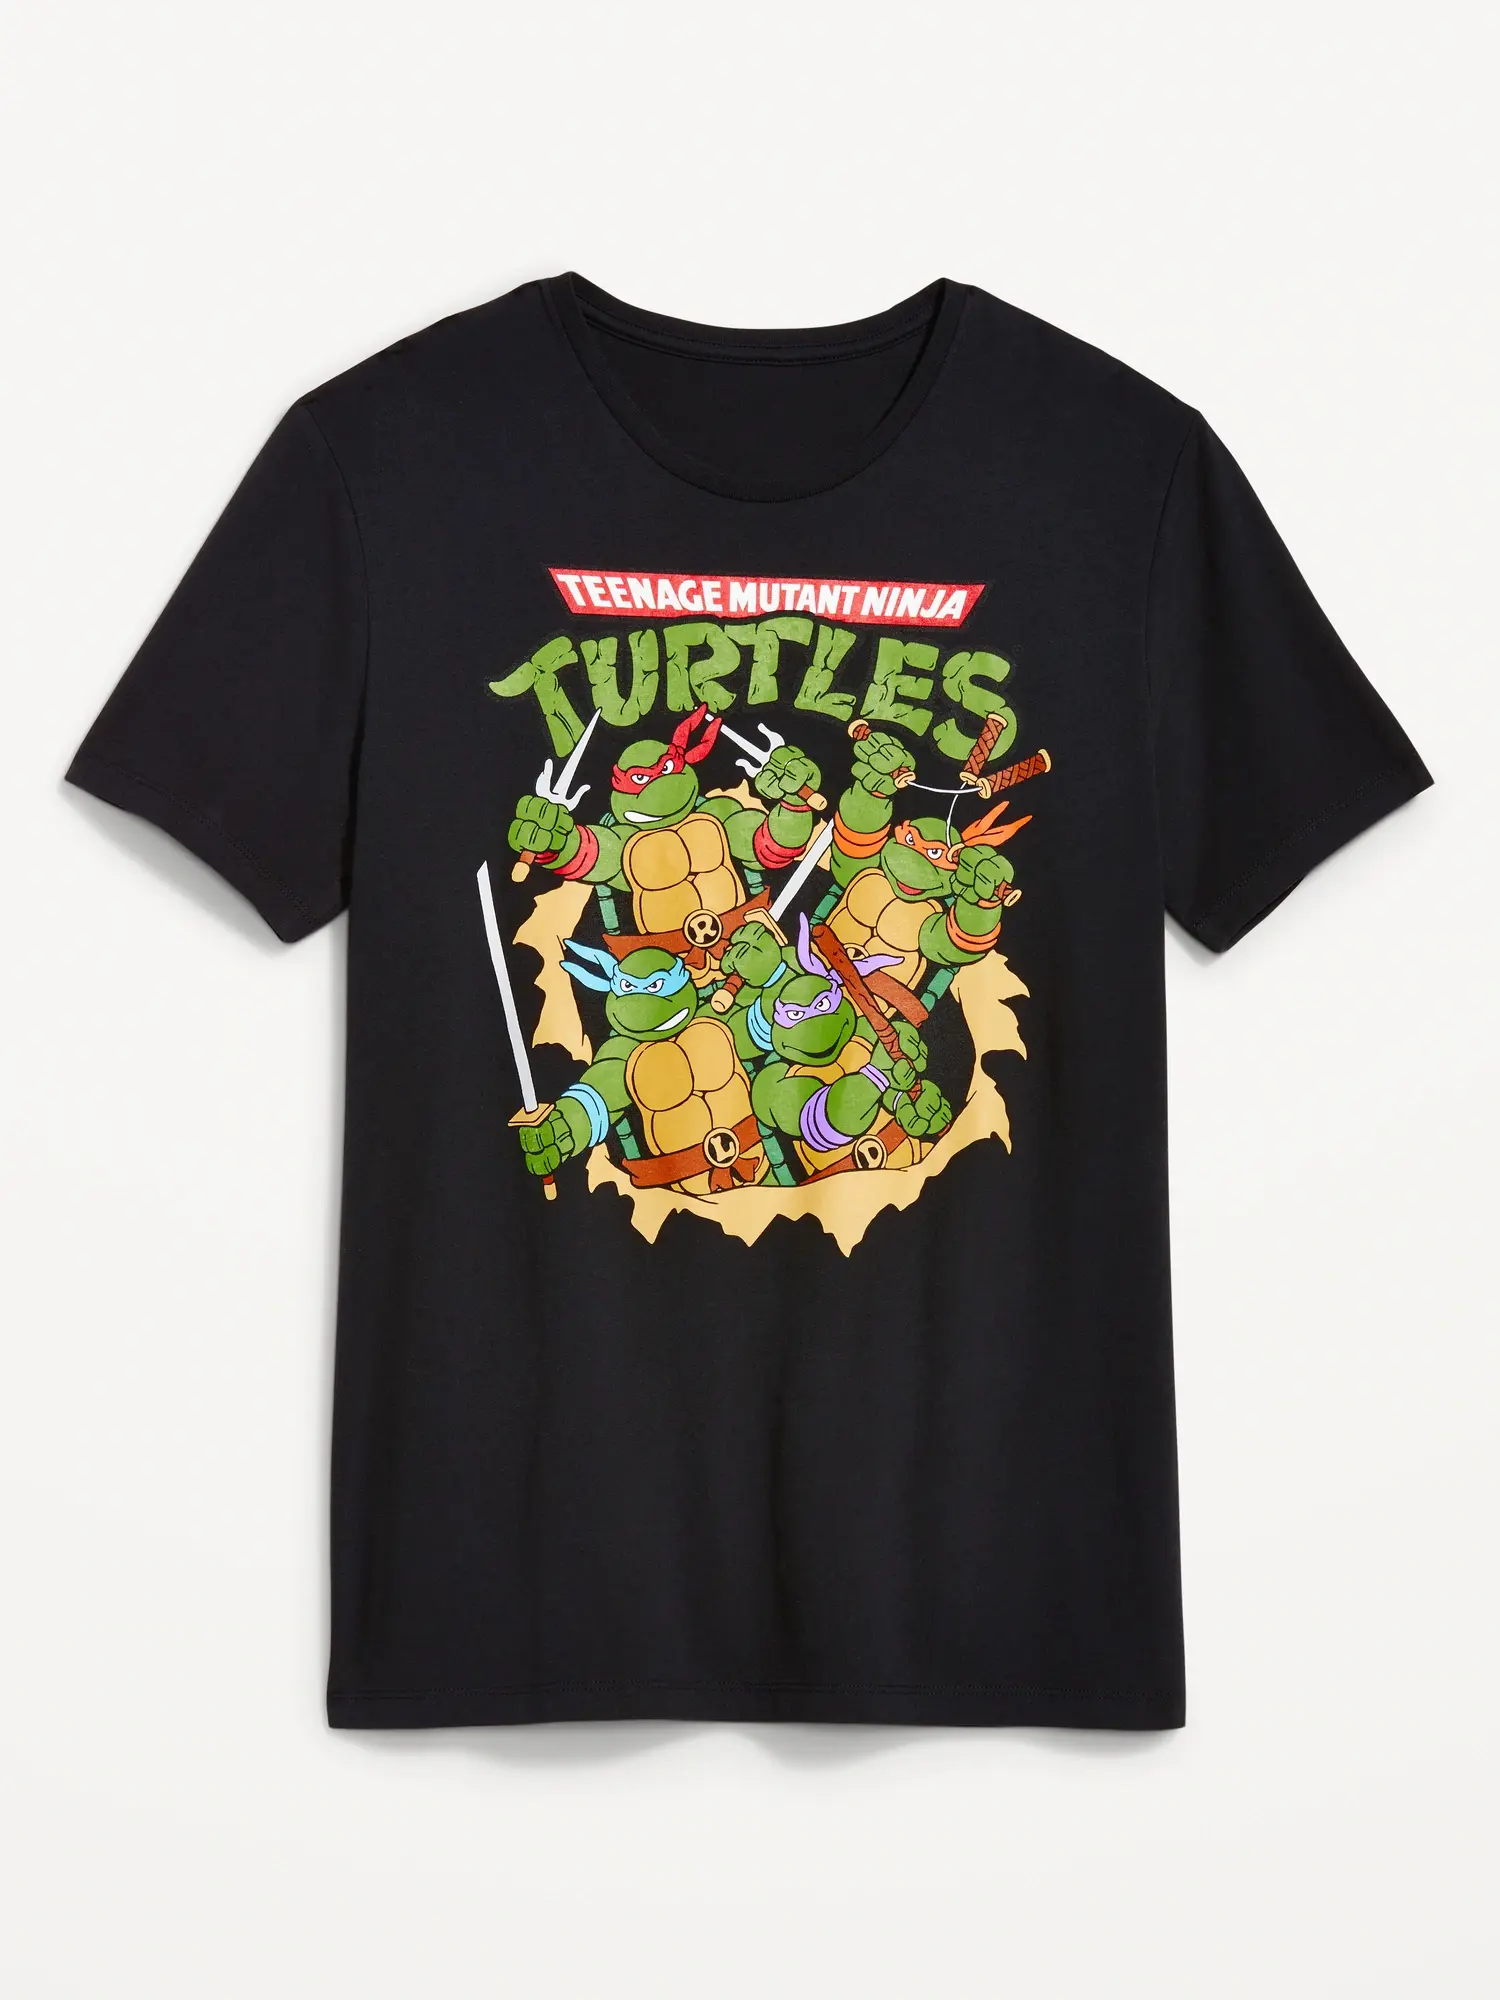 Old Navy Teenage Mutant Ninja Turtles™ Gender-Neutral T-Shirt for Adults black. 1